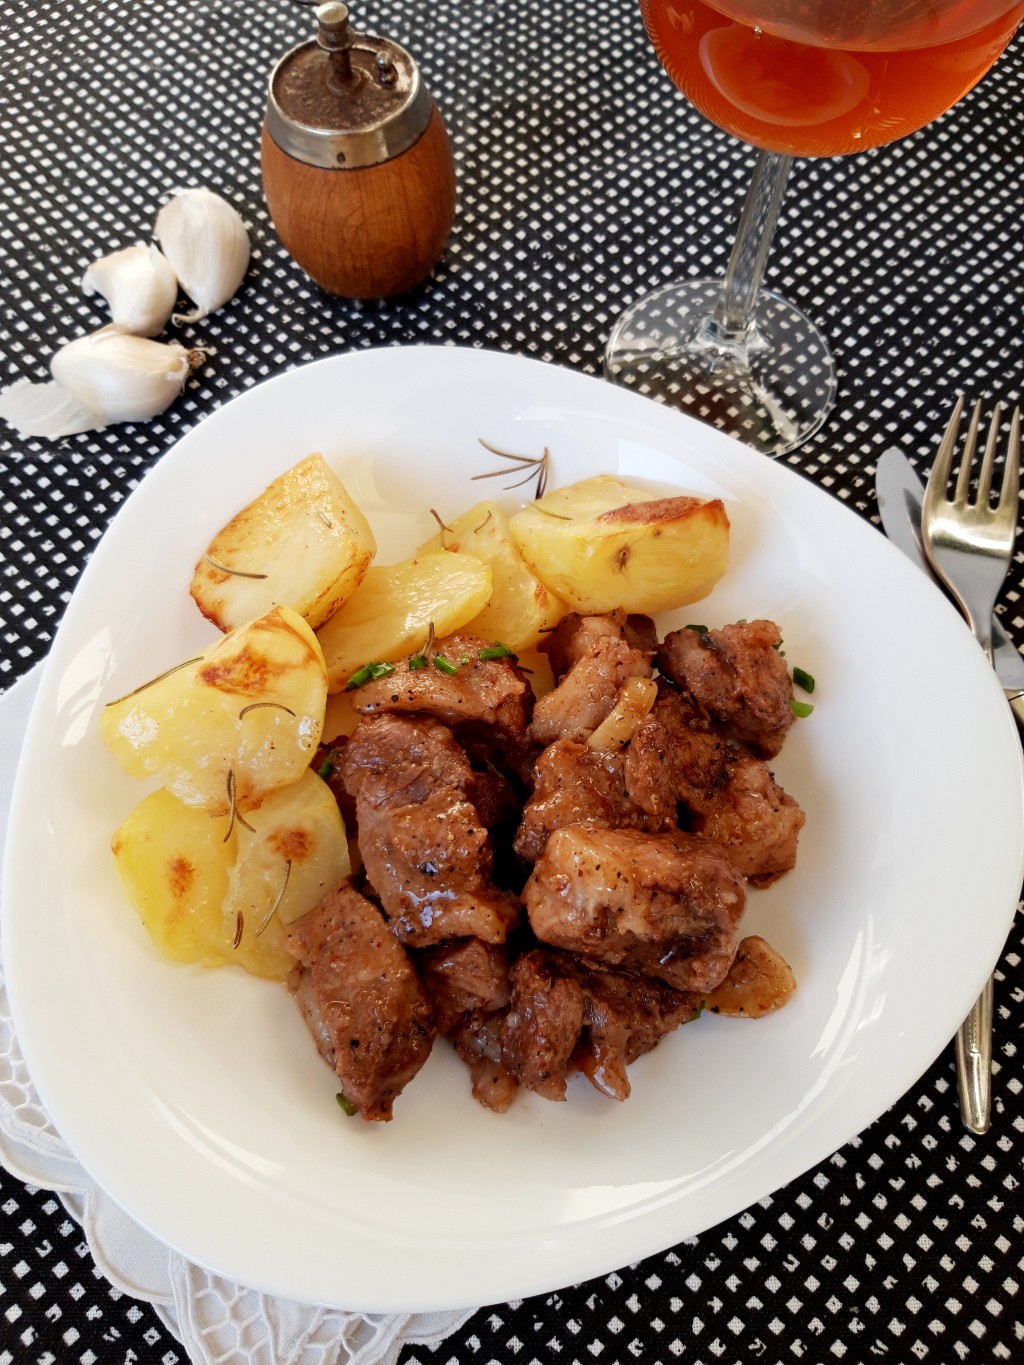 Мариновано свинско с вино и чесън (Carne Vinha d’alhos)